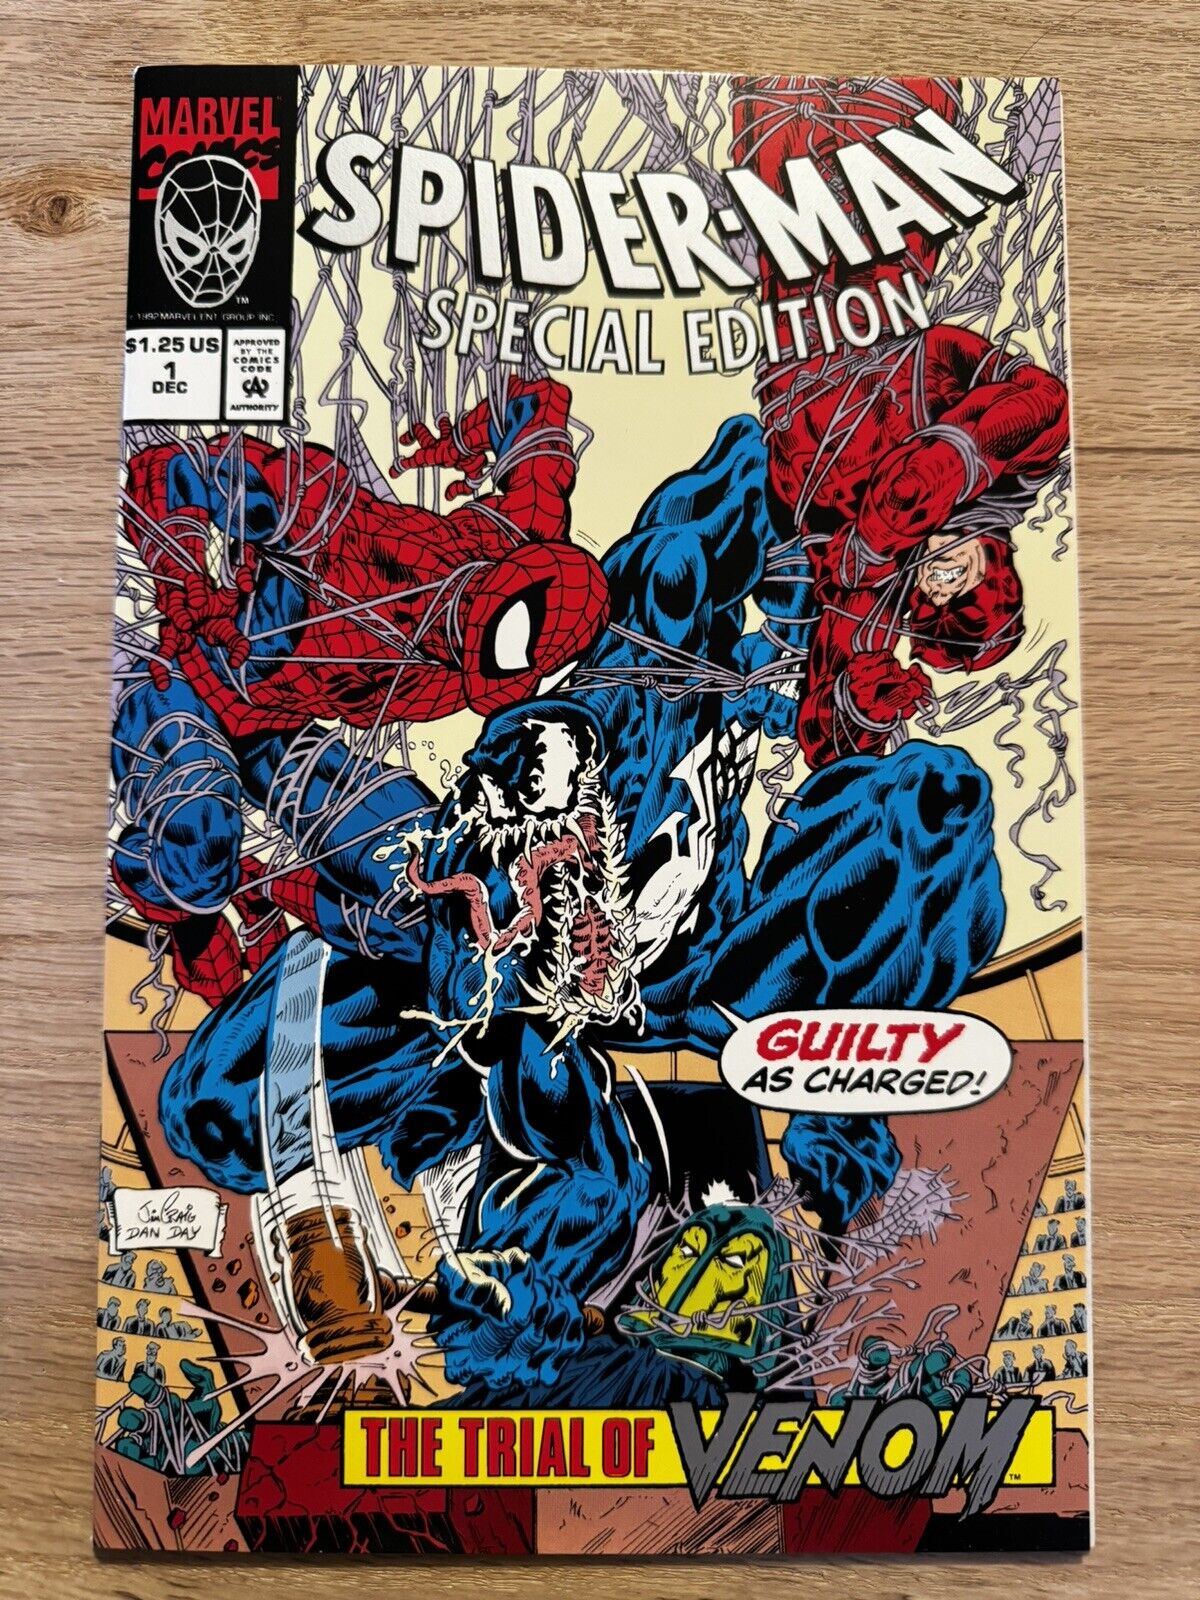 Marvel SPIDER-MAN SPECIAL EDITION #1 (1992) TRIAL OF VENOM - DAREDEVIL